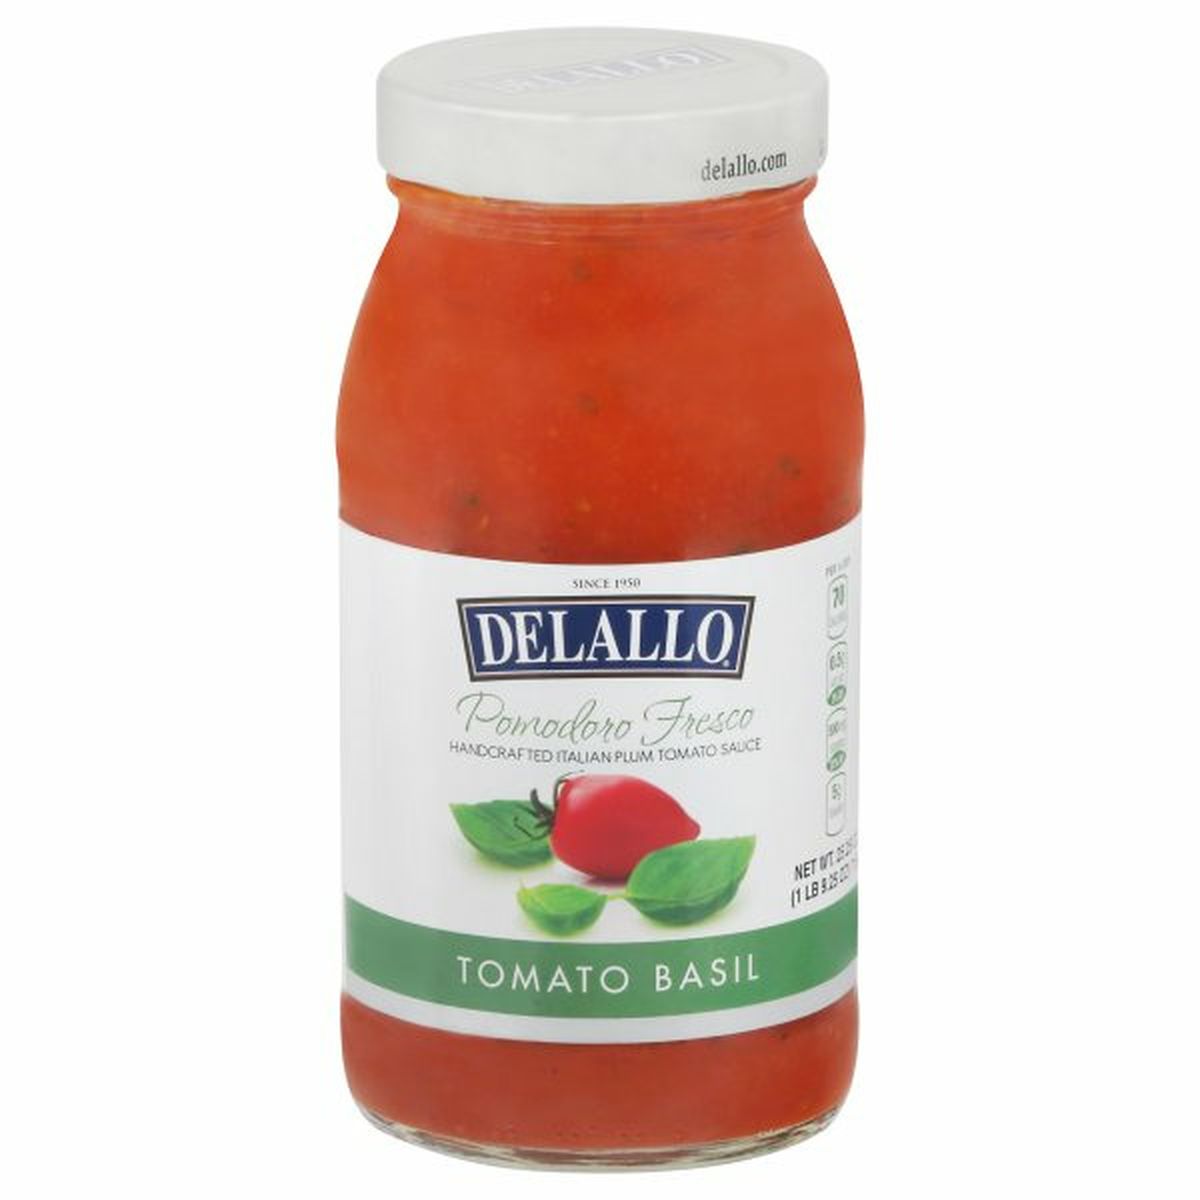 Calories in DeLallo Pomodoro Fresco, Tomato Basil